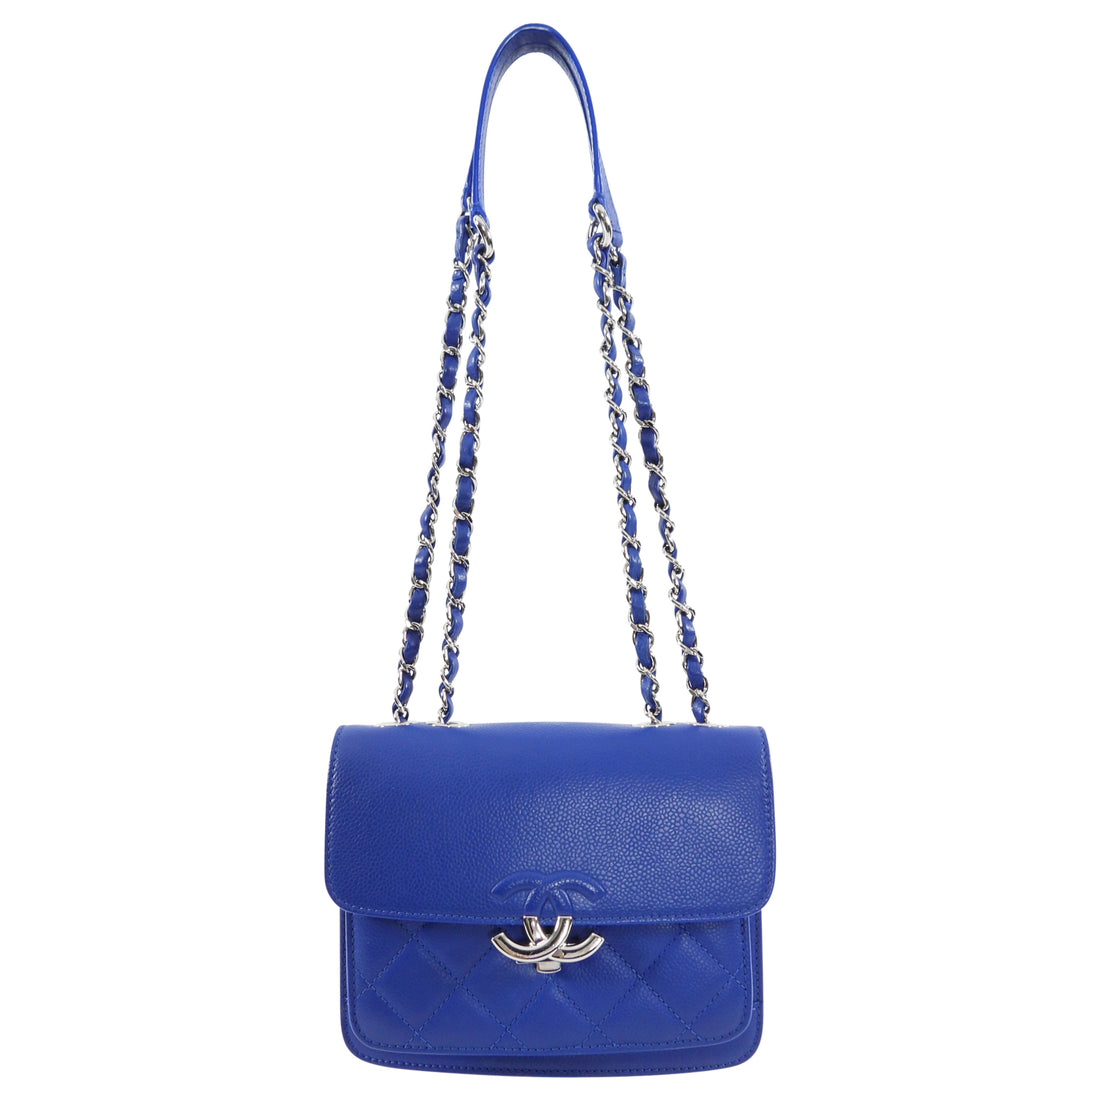 Chanel Cobalt Blue Small CC Box Chain Flap Bag – I MISS YOU VINTAGE